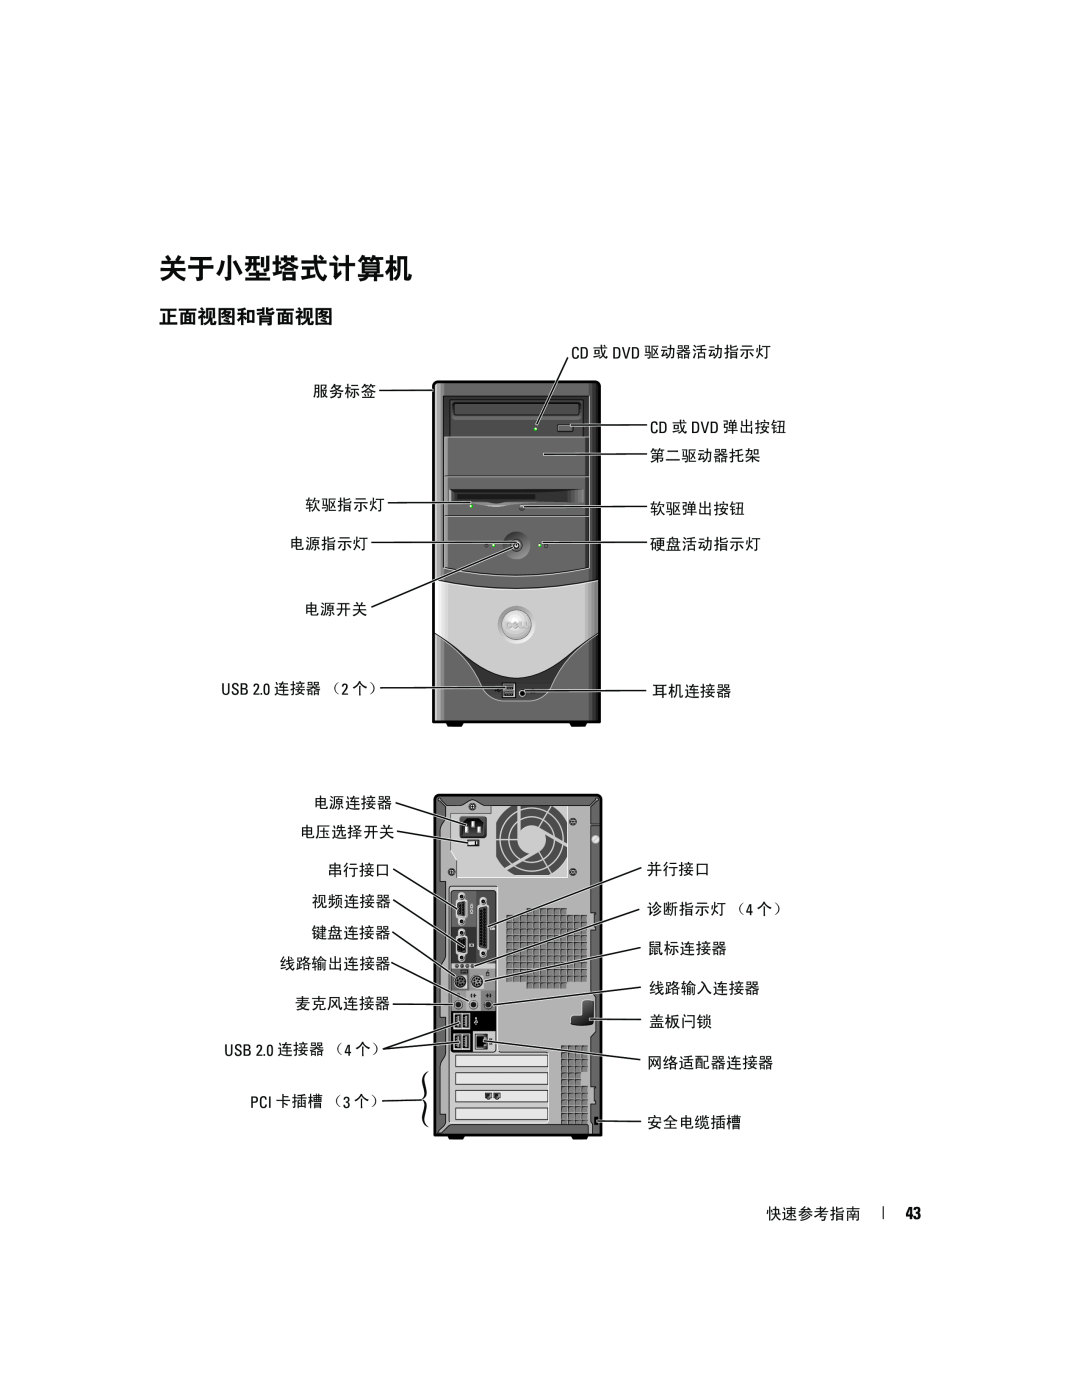 Dell Y6452 manual Cd 或 Dvd 弹出按钮, 关于小型塔式计算机 正面视图和背面视图 